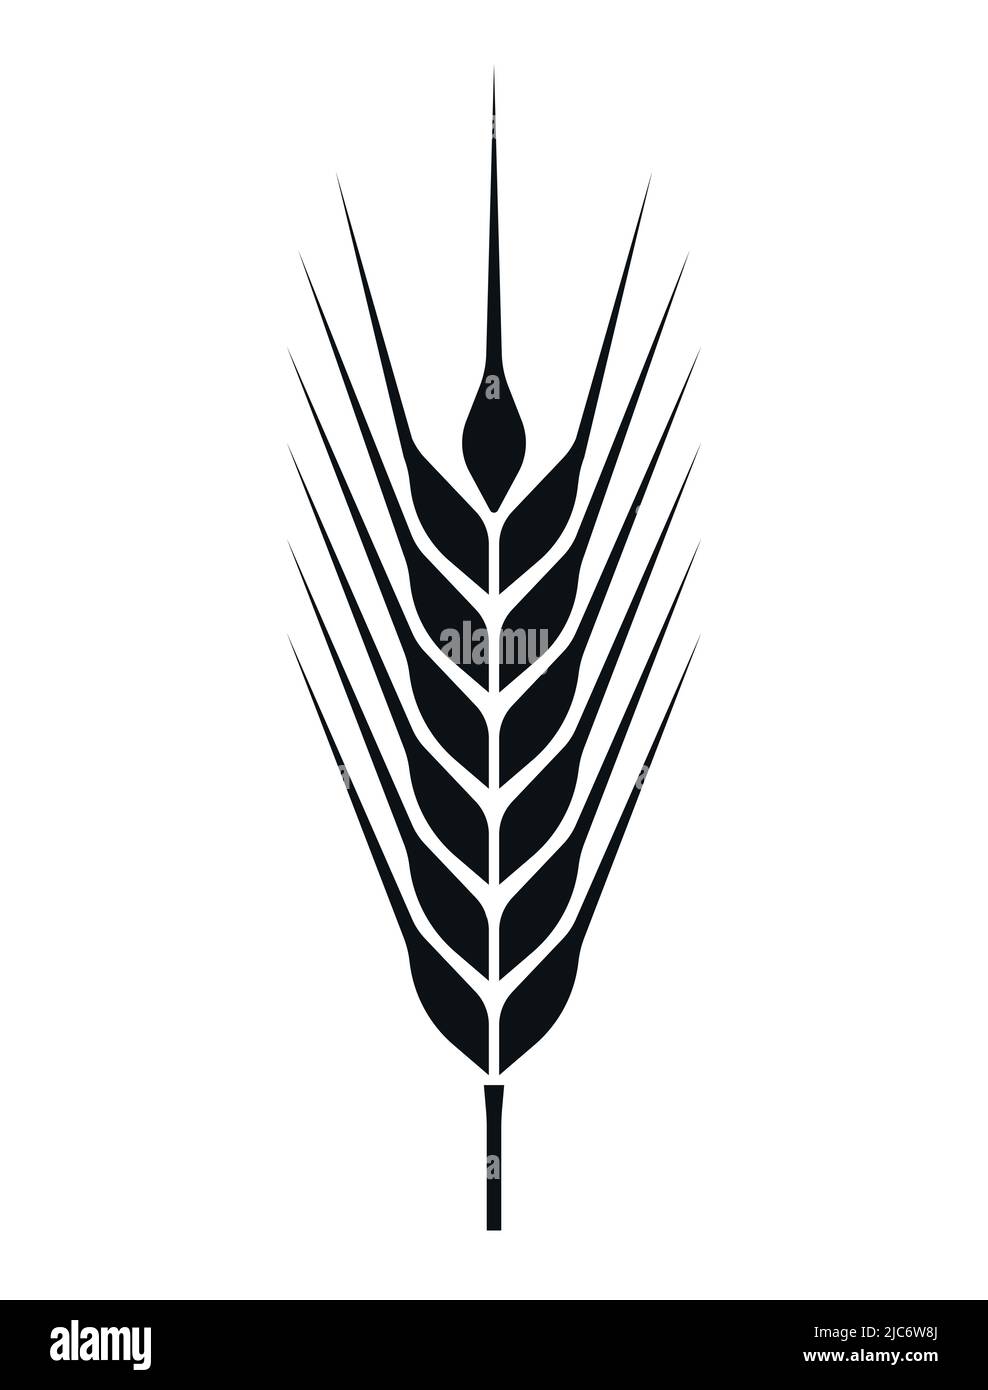 Ripe wheat ear or grain symbol agriculture vector illustration icon Stock Vector